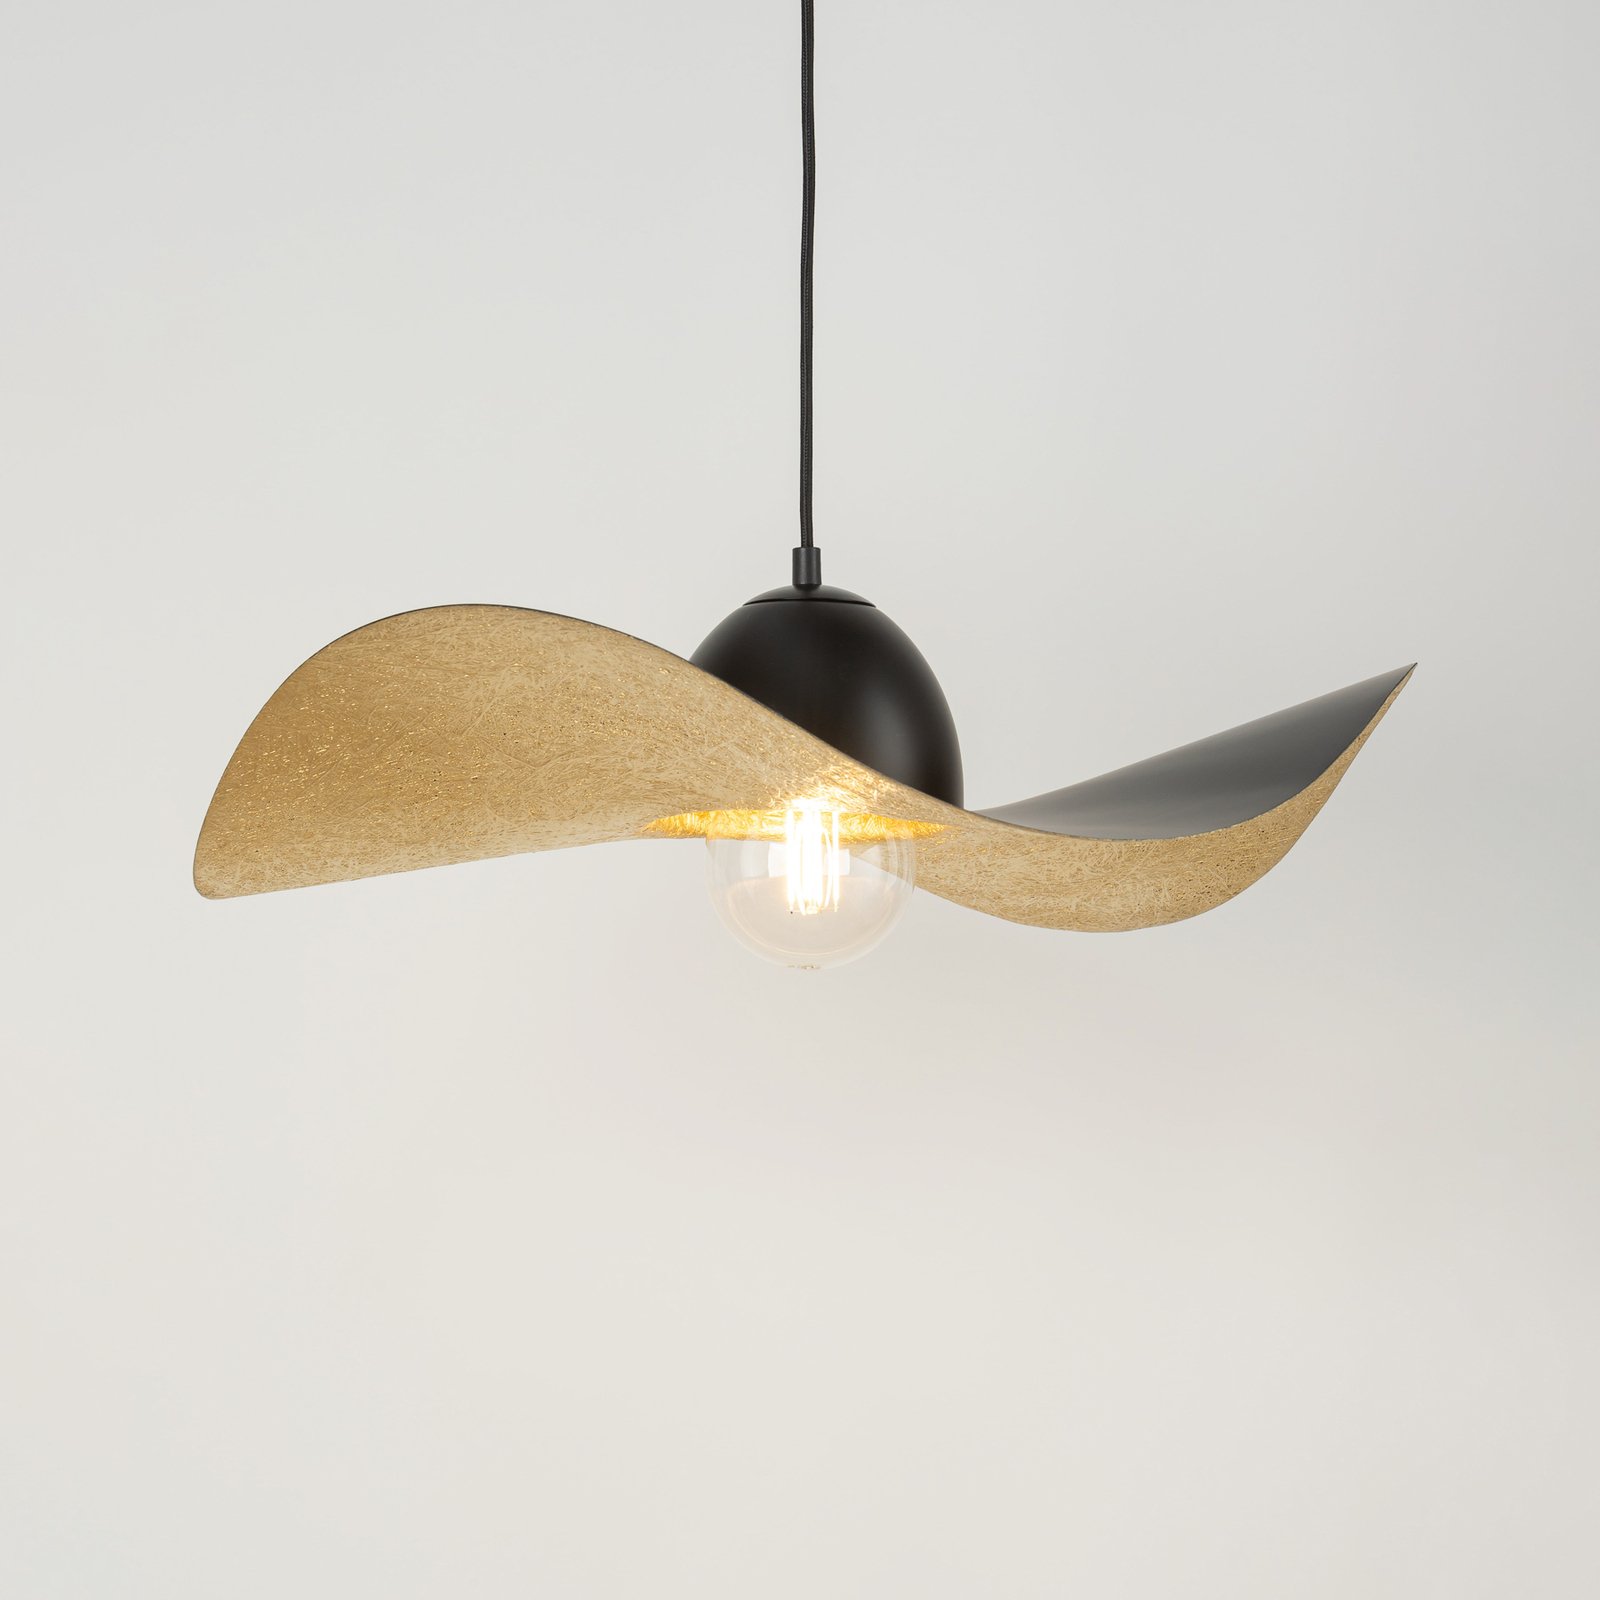 Jil pendant light, curved lampshade, black/gold